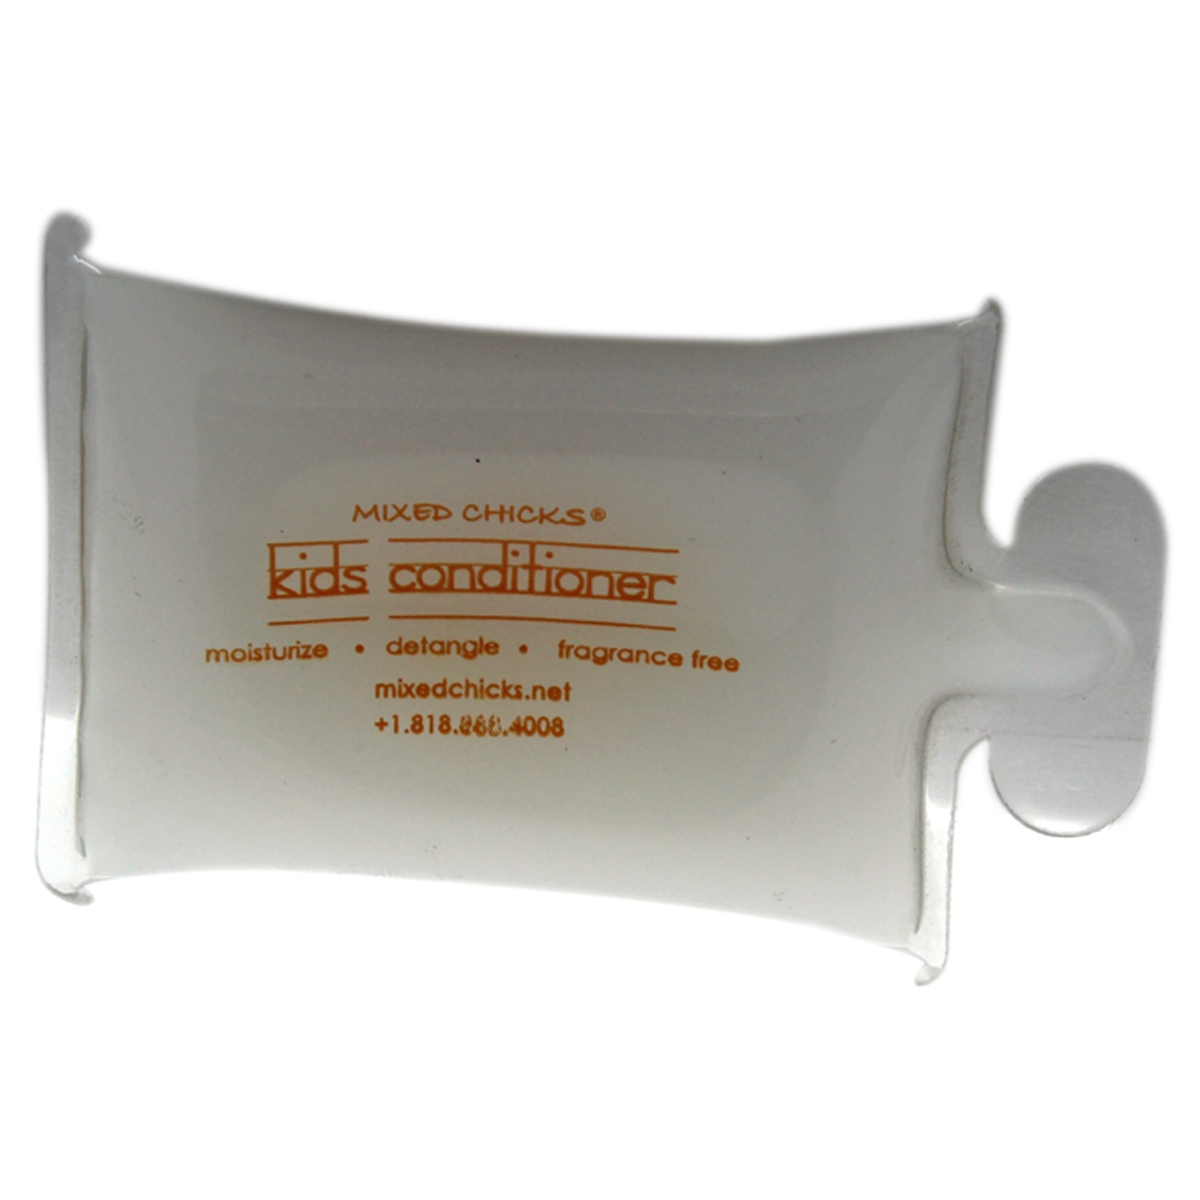 K-hc-1085 0.75 Oz Kids Conditioner For Kids